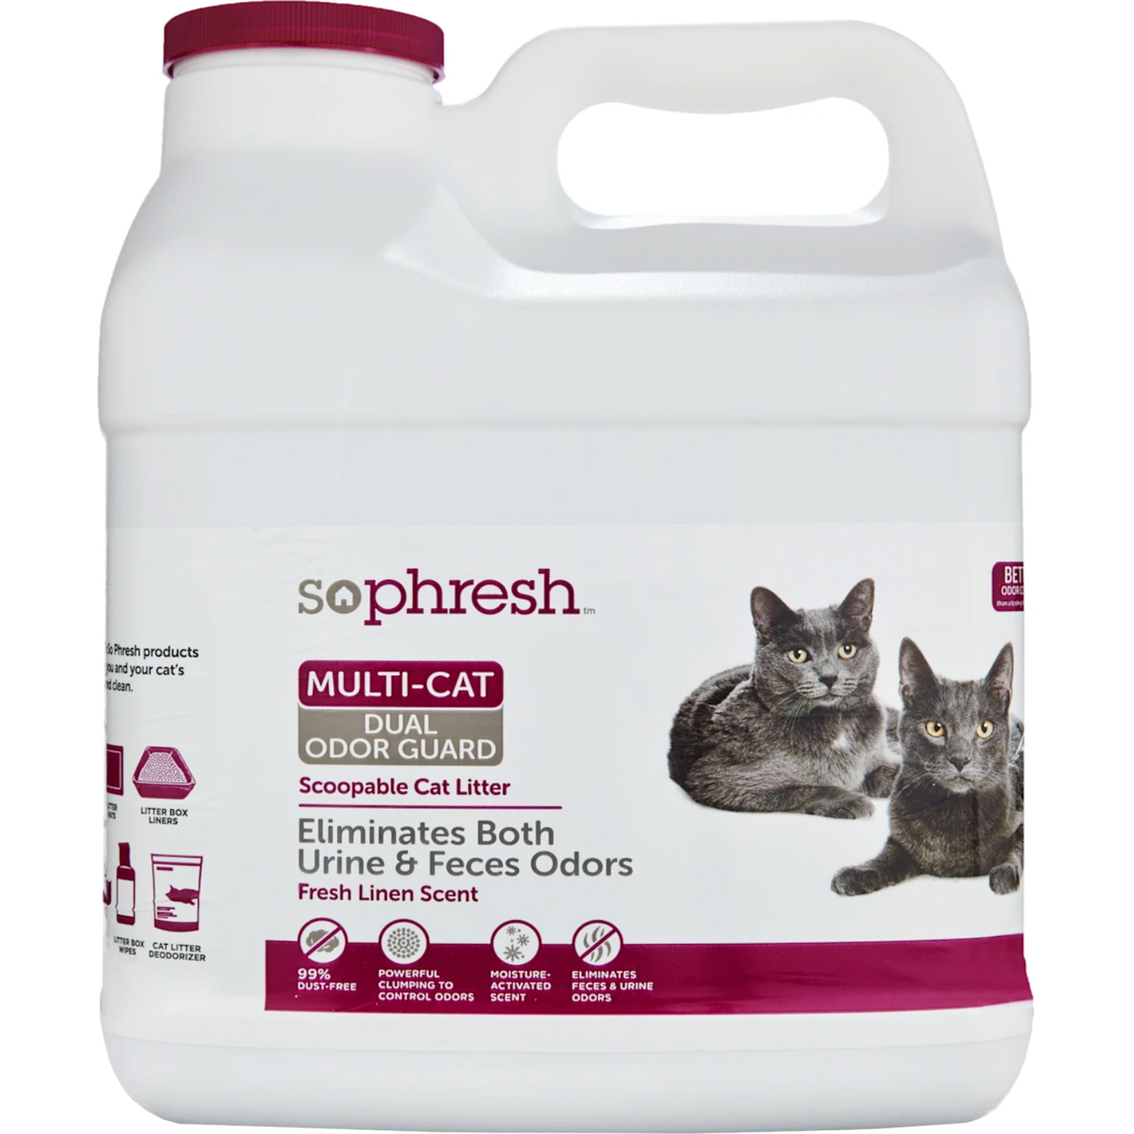 So Phresh Dual Odor Guard Scoopable Cat Litter 16 Lb. Litter & Waste